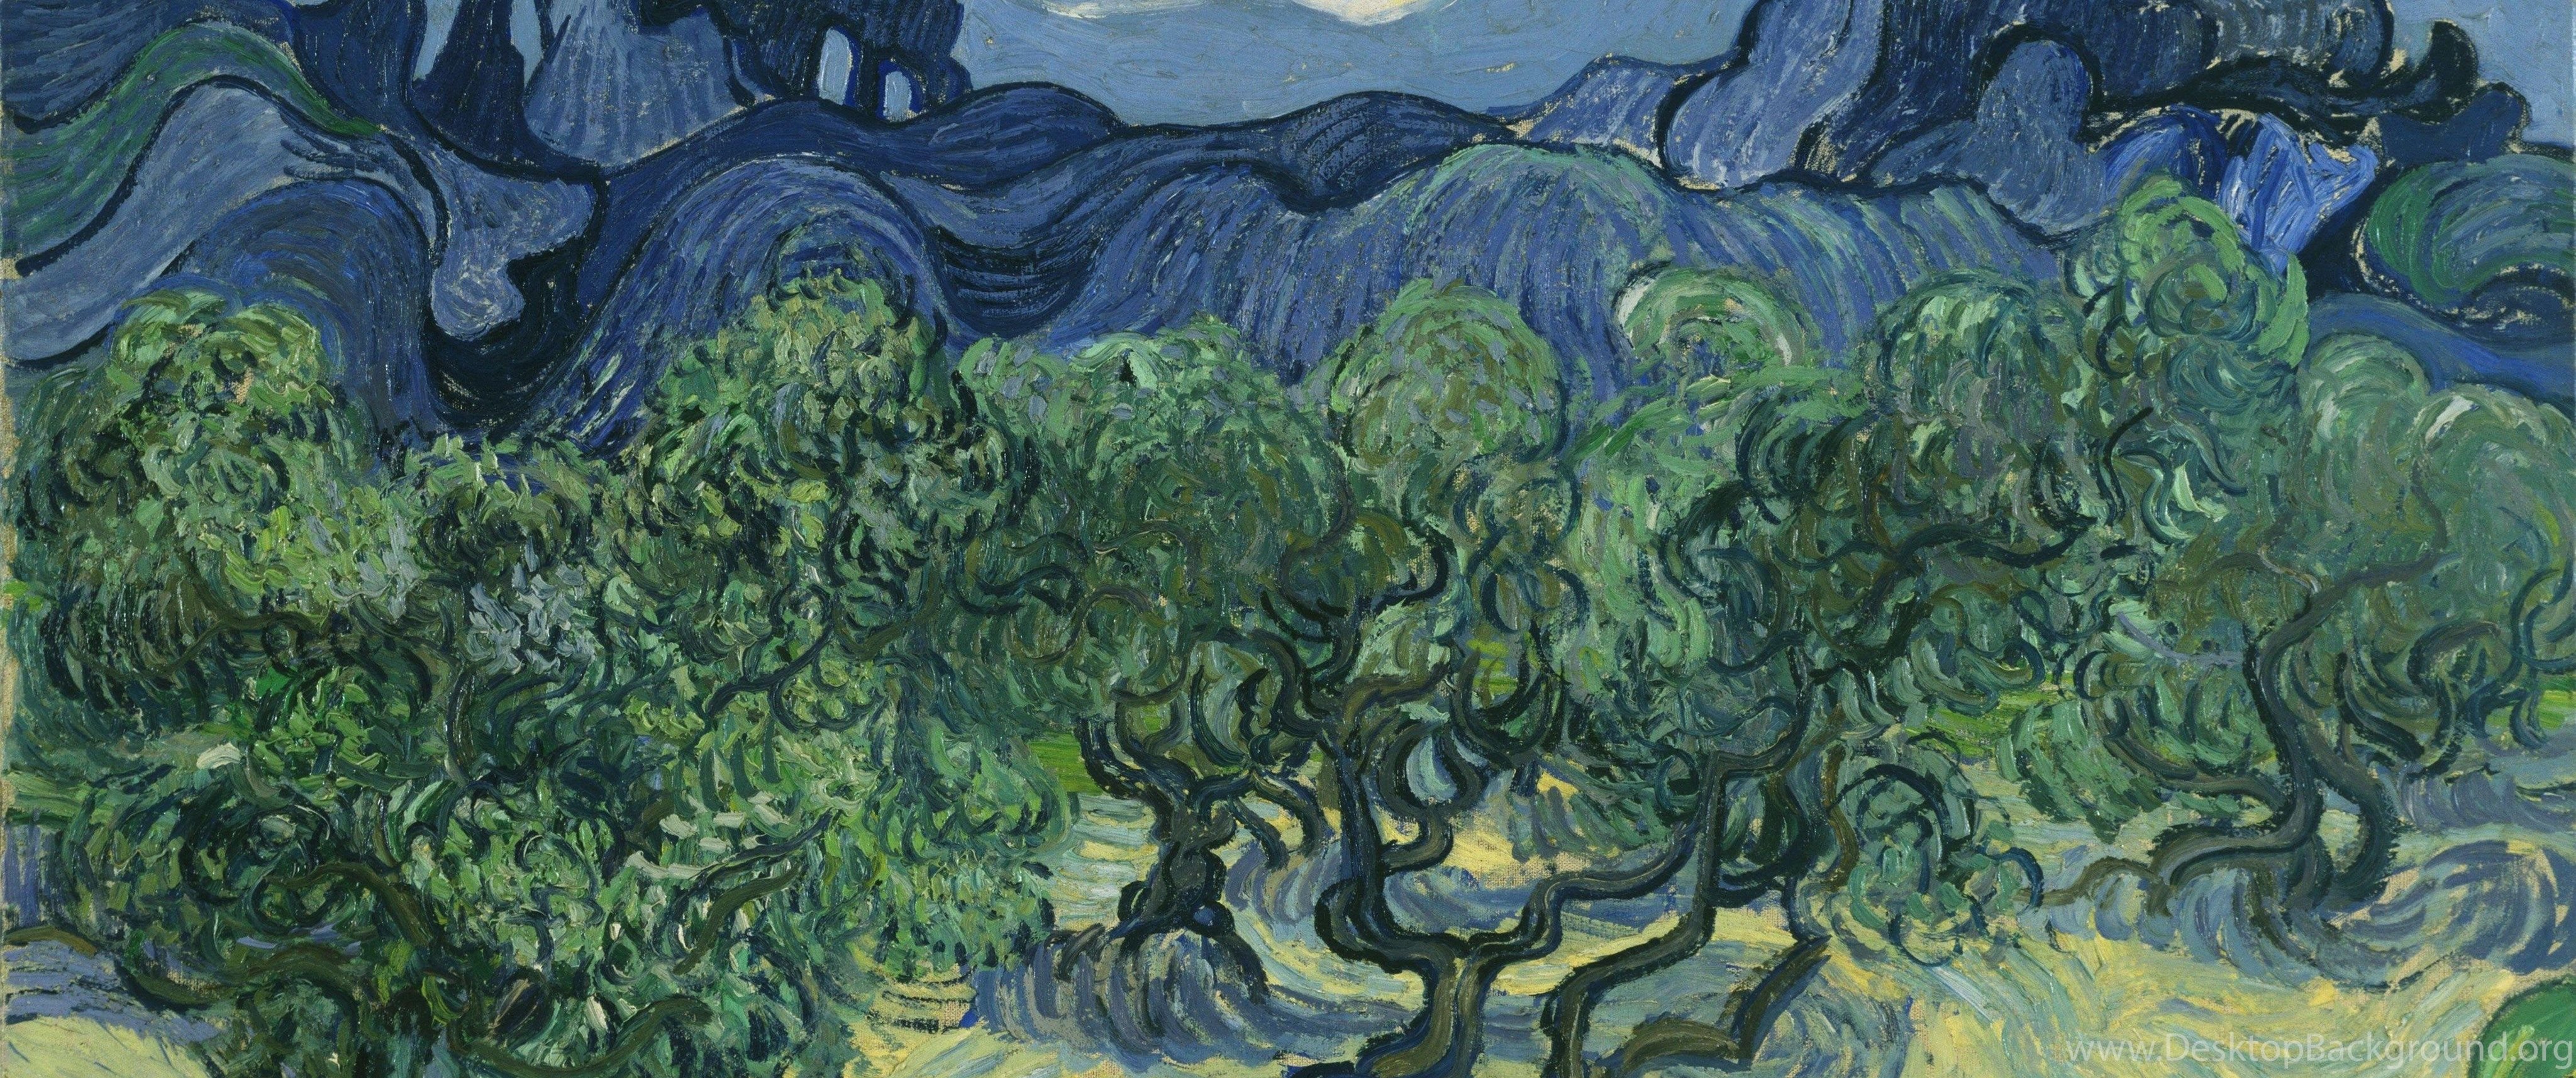 Painting Of Vincent Van Gogh Olive Trees Wallpaper And Image. Desktop Background